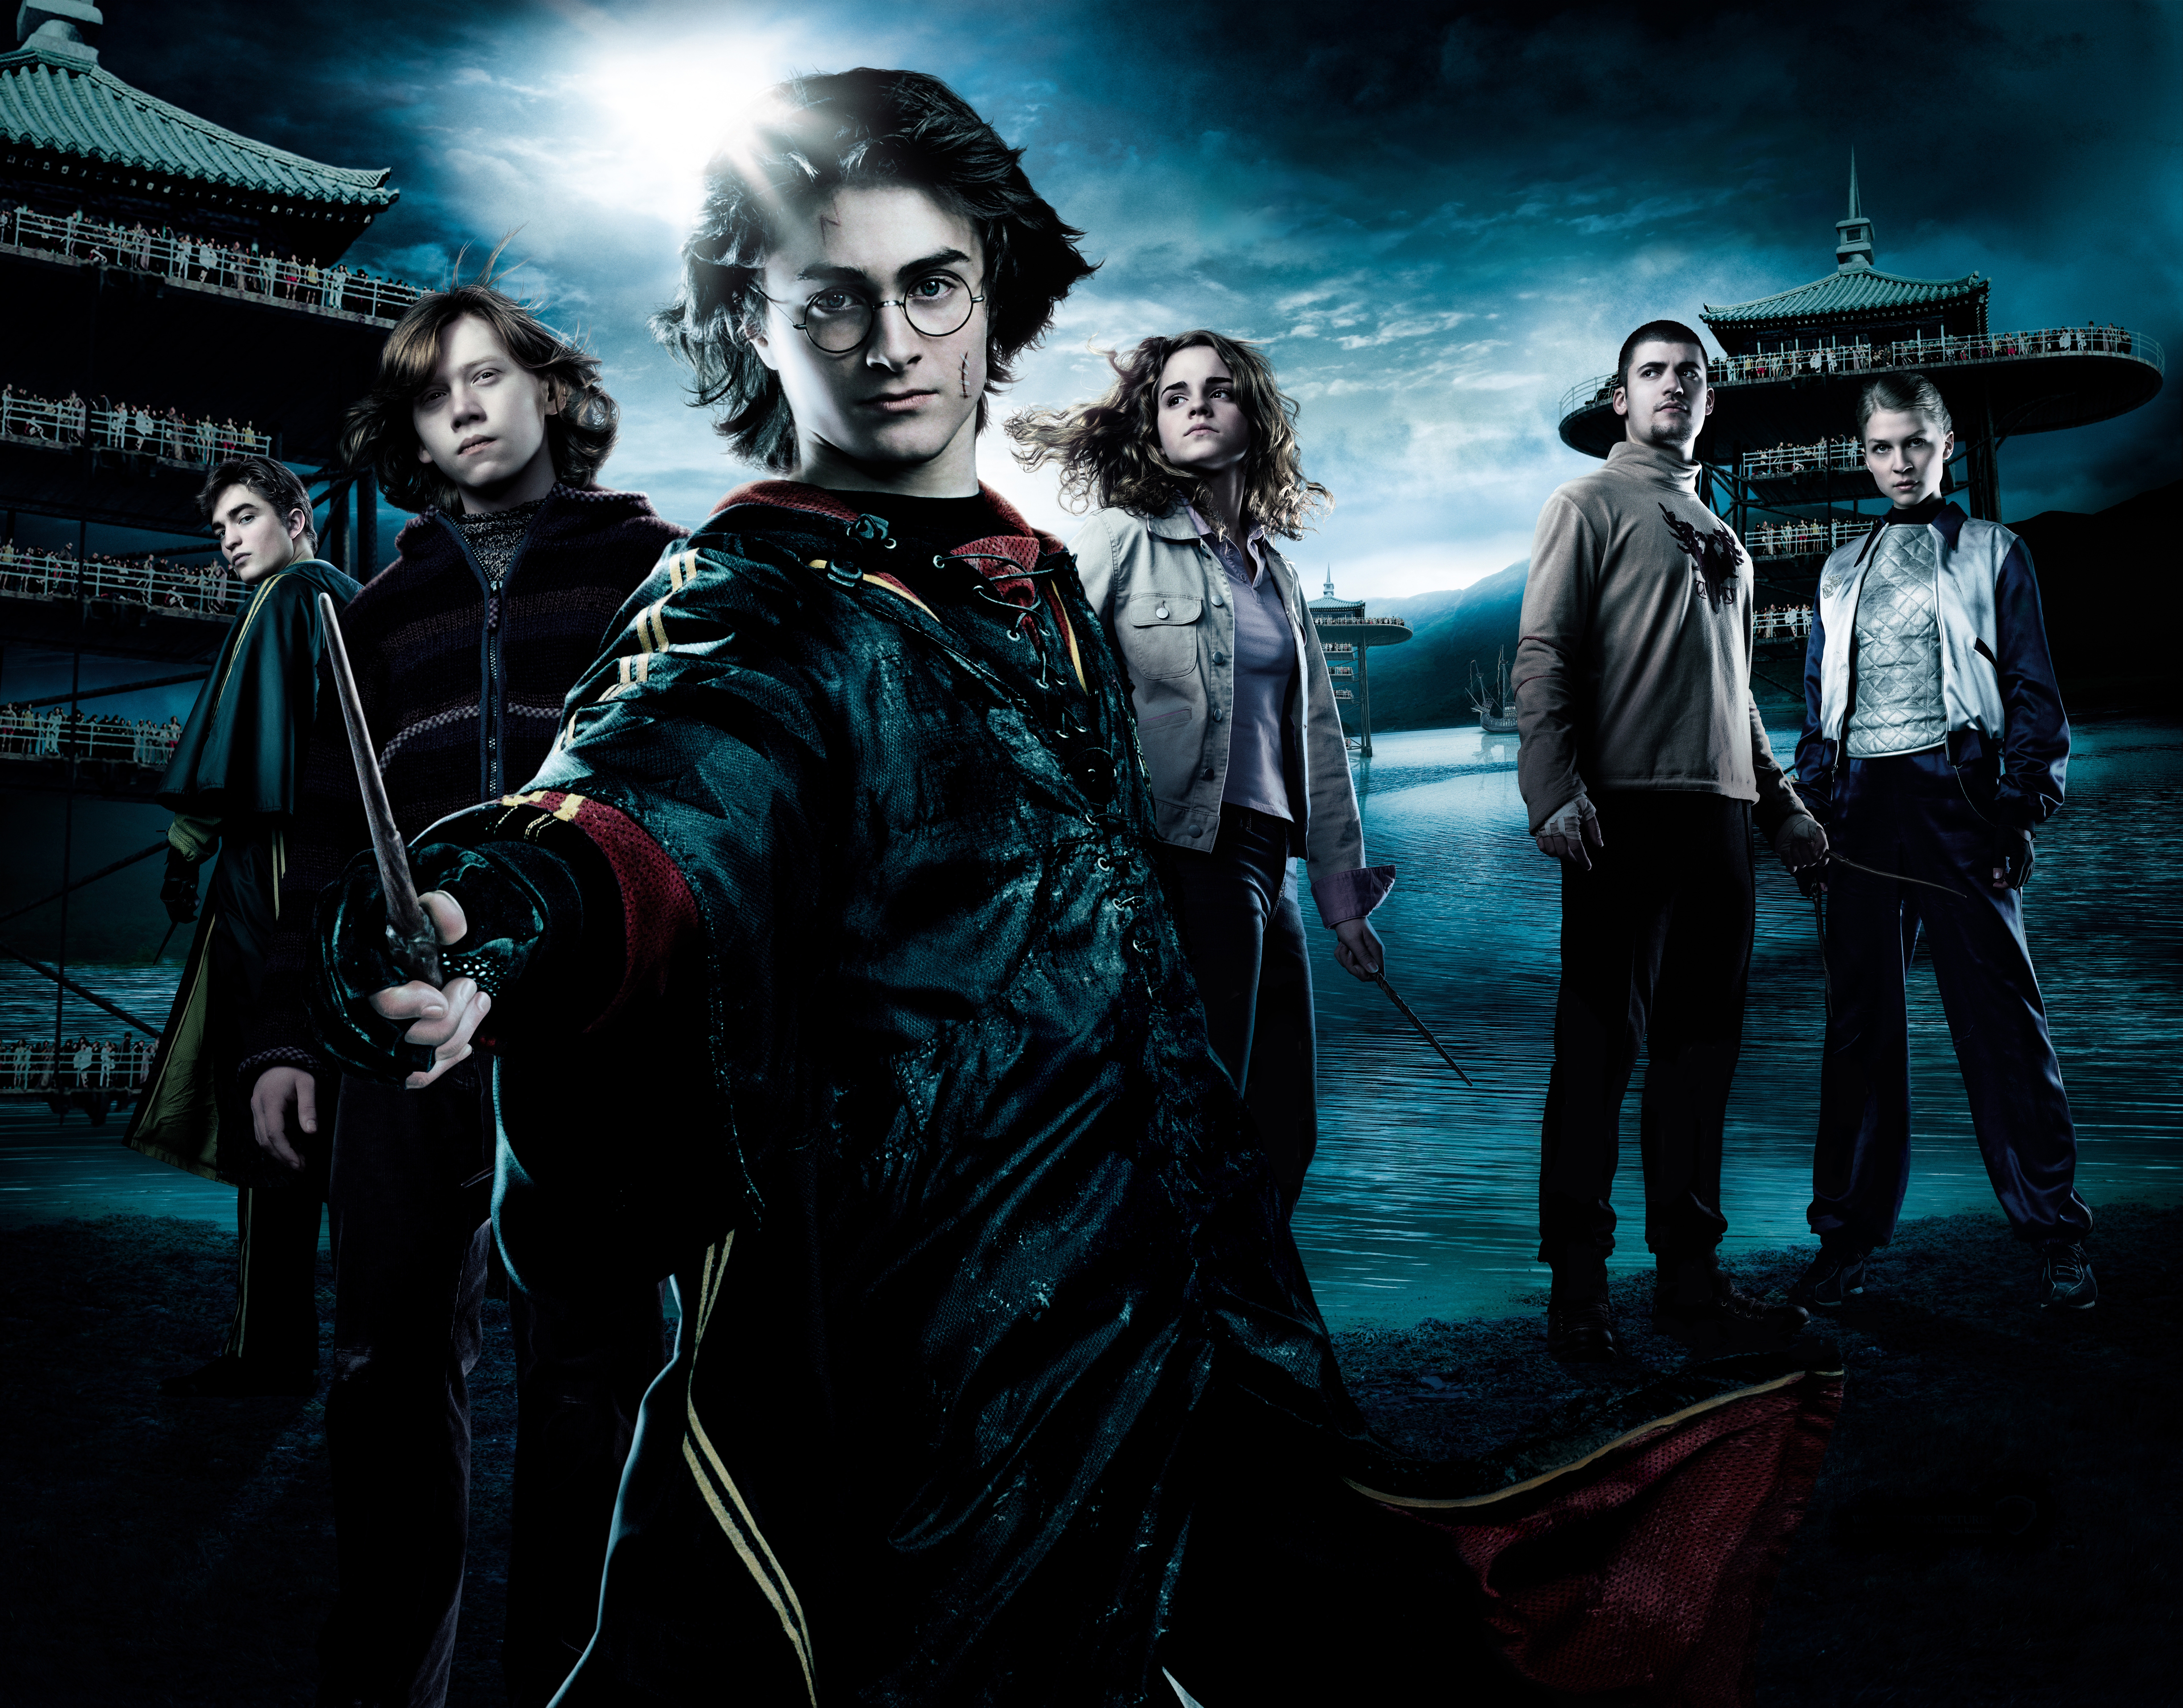 HD wallpaper, 8K, 5K, Daniel Radcliffe As Harry Potter, Ron Weasley, Harry Potter And The Goblet Of Fire, Emma Watson As Hermione Granger